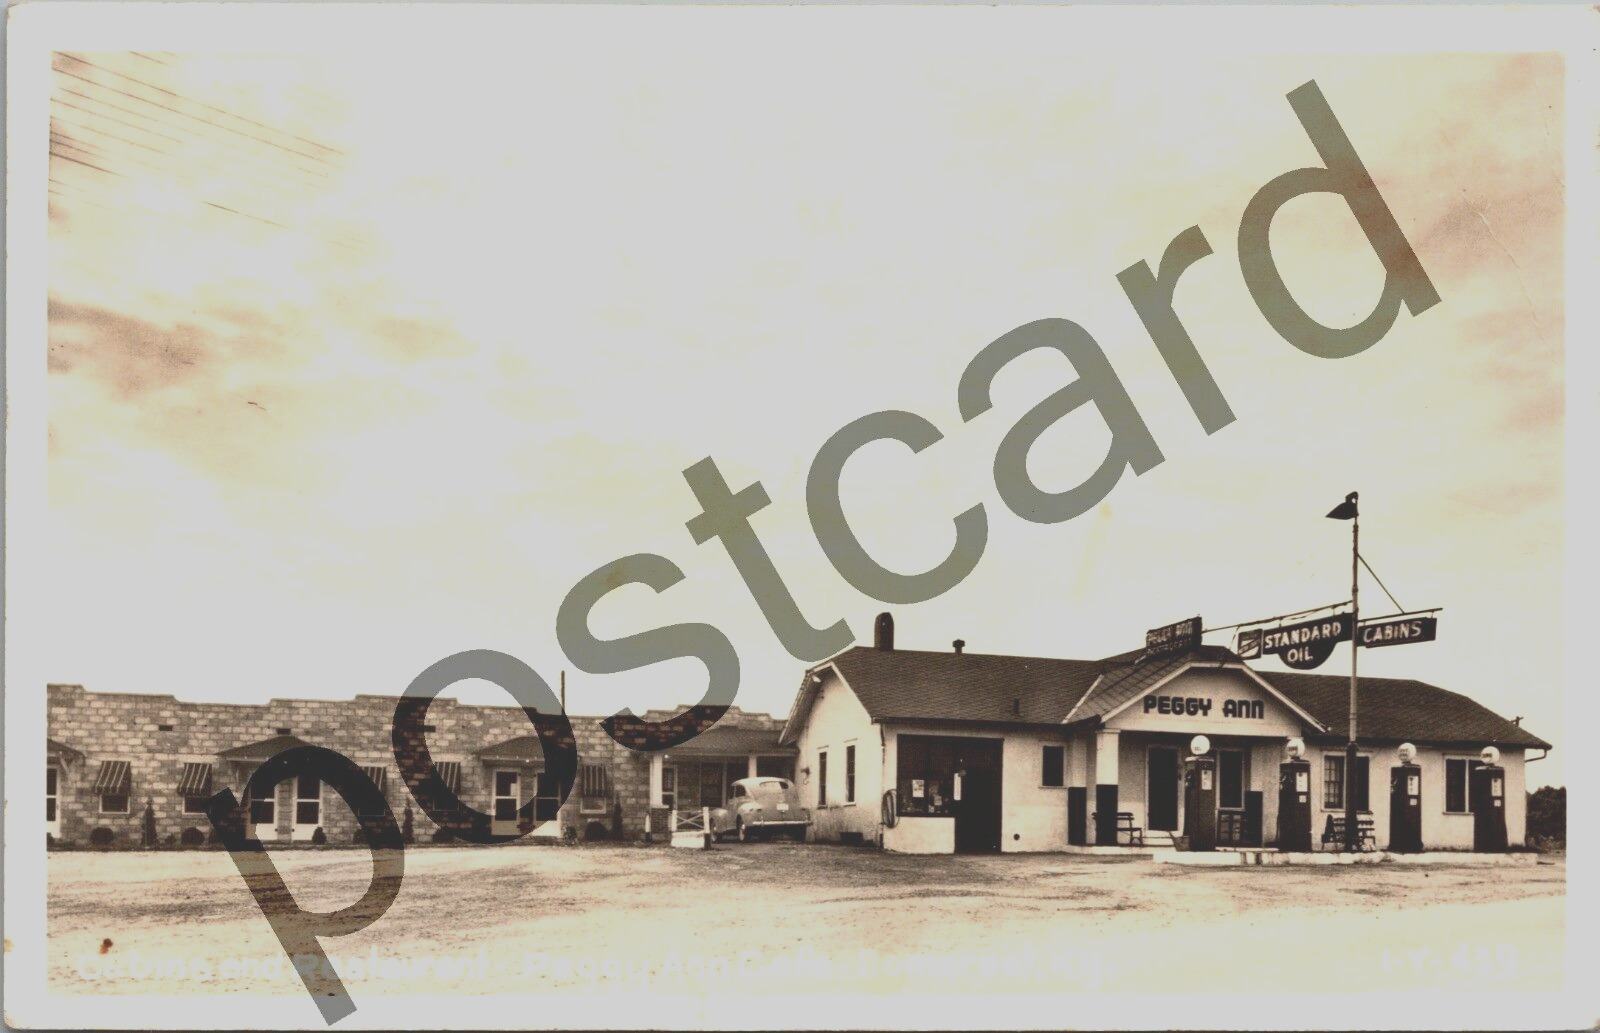 1949 SOMERSET KY, Peggy Ann Cafe, Cabins, Standard Oil, 4 gas pumps, RPPC jj281